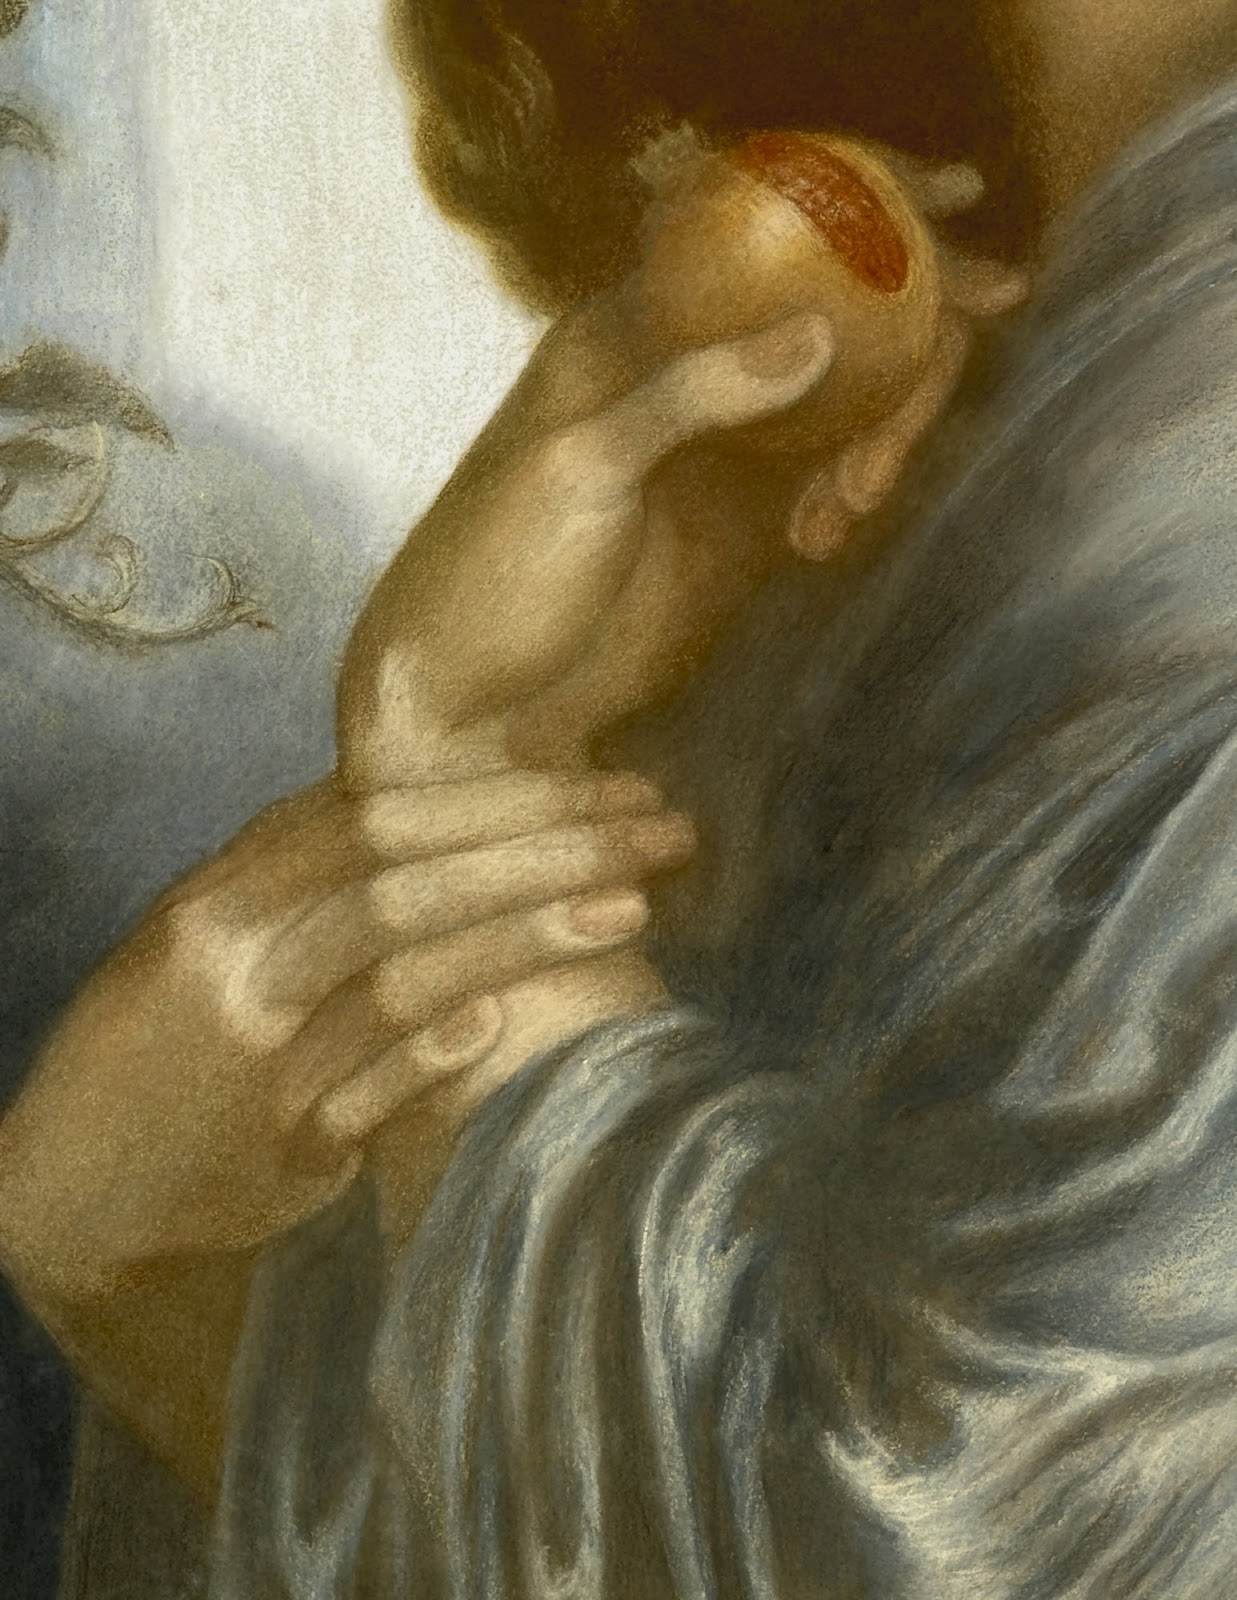 Dante+Gabriel+Rossetti-1828-1882 (134).jpg